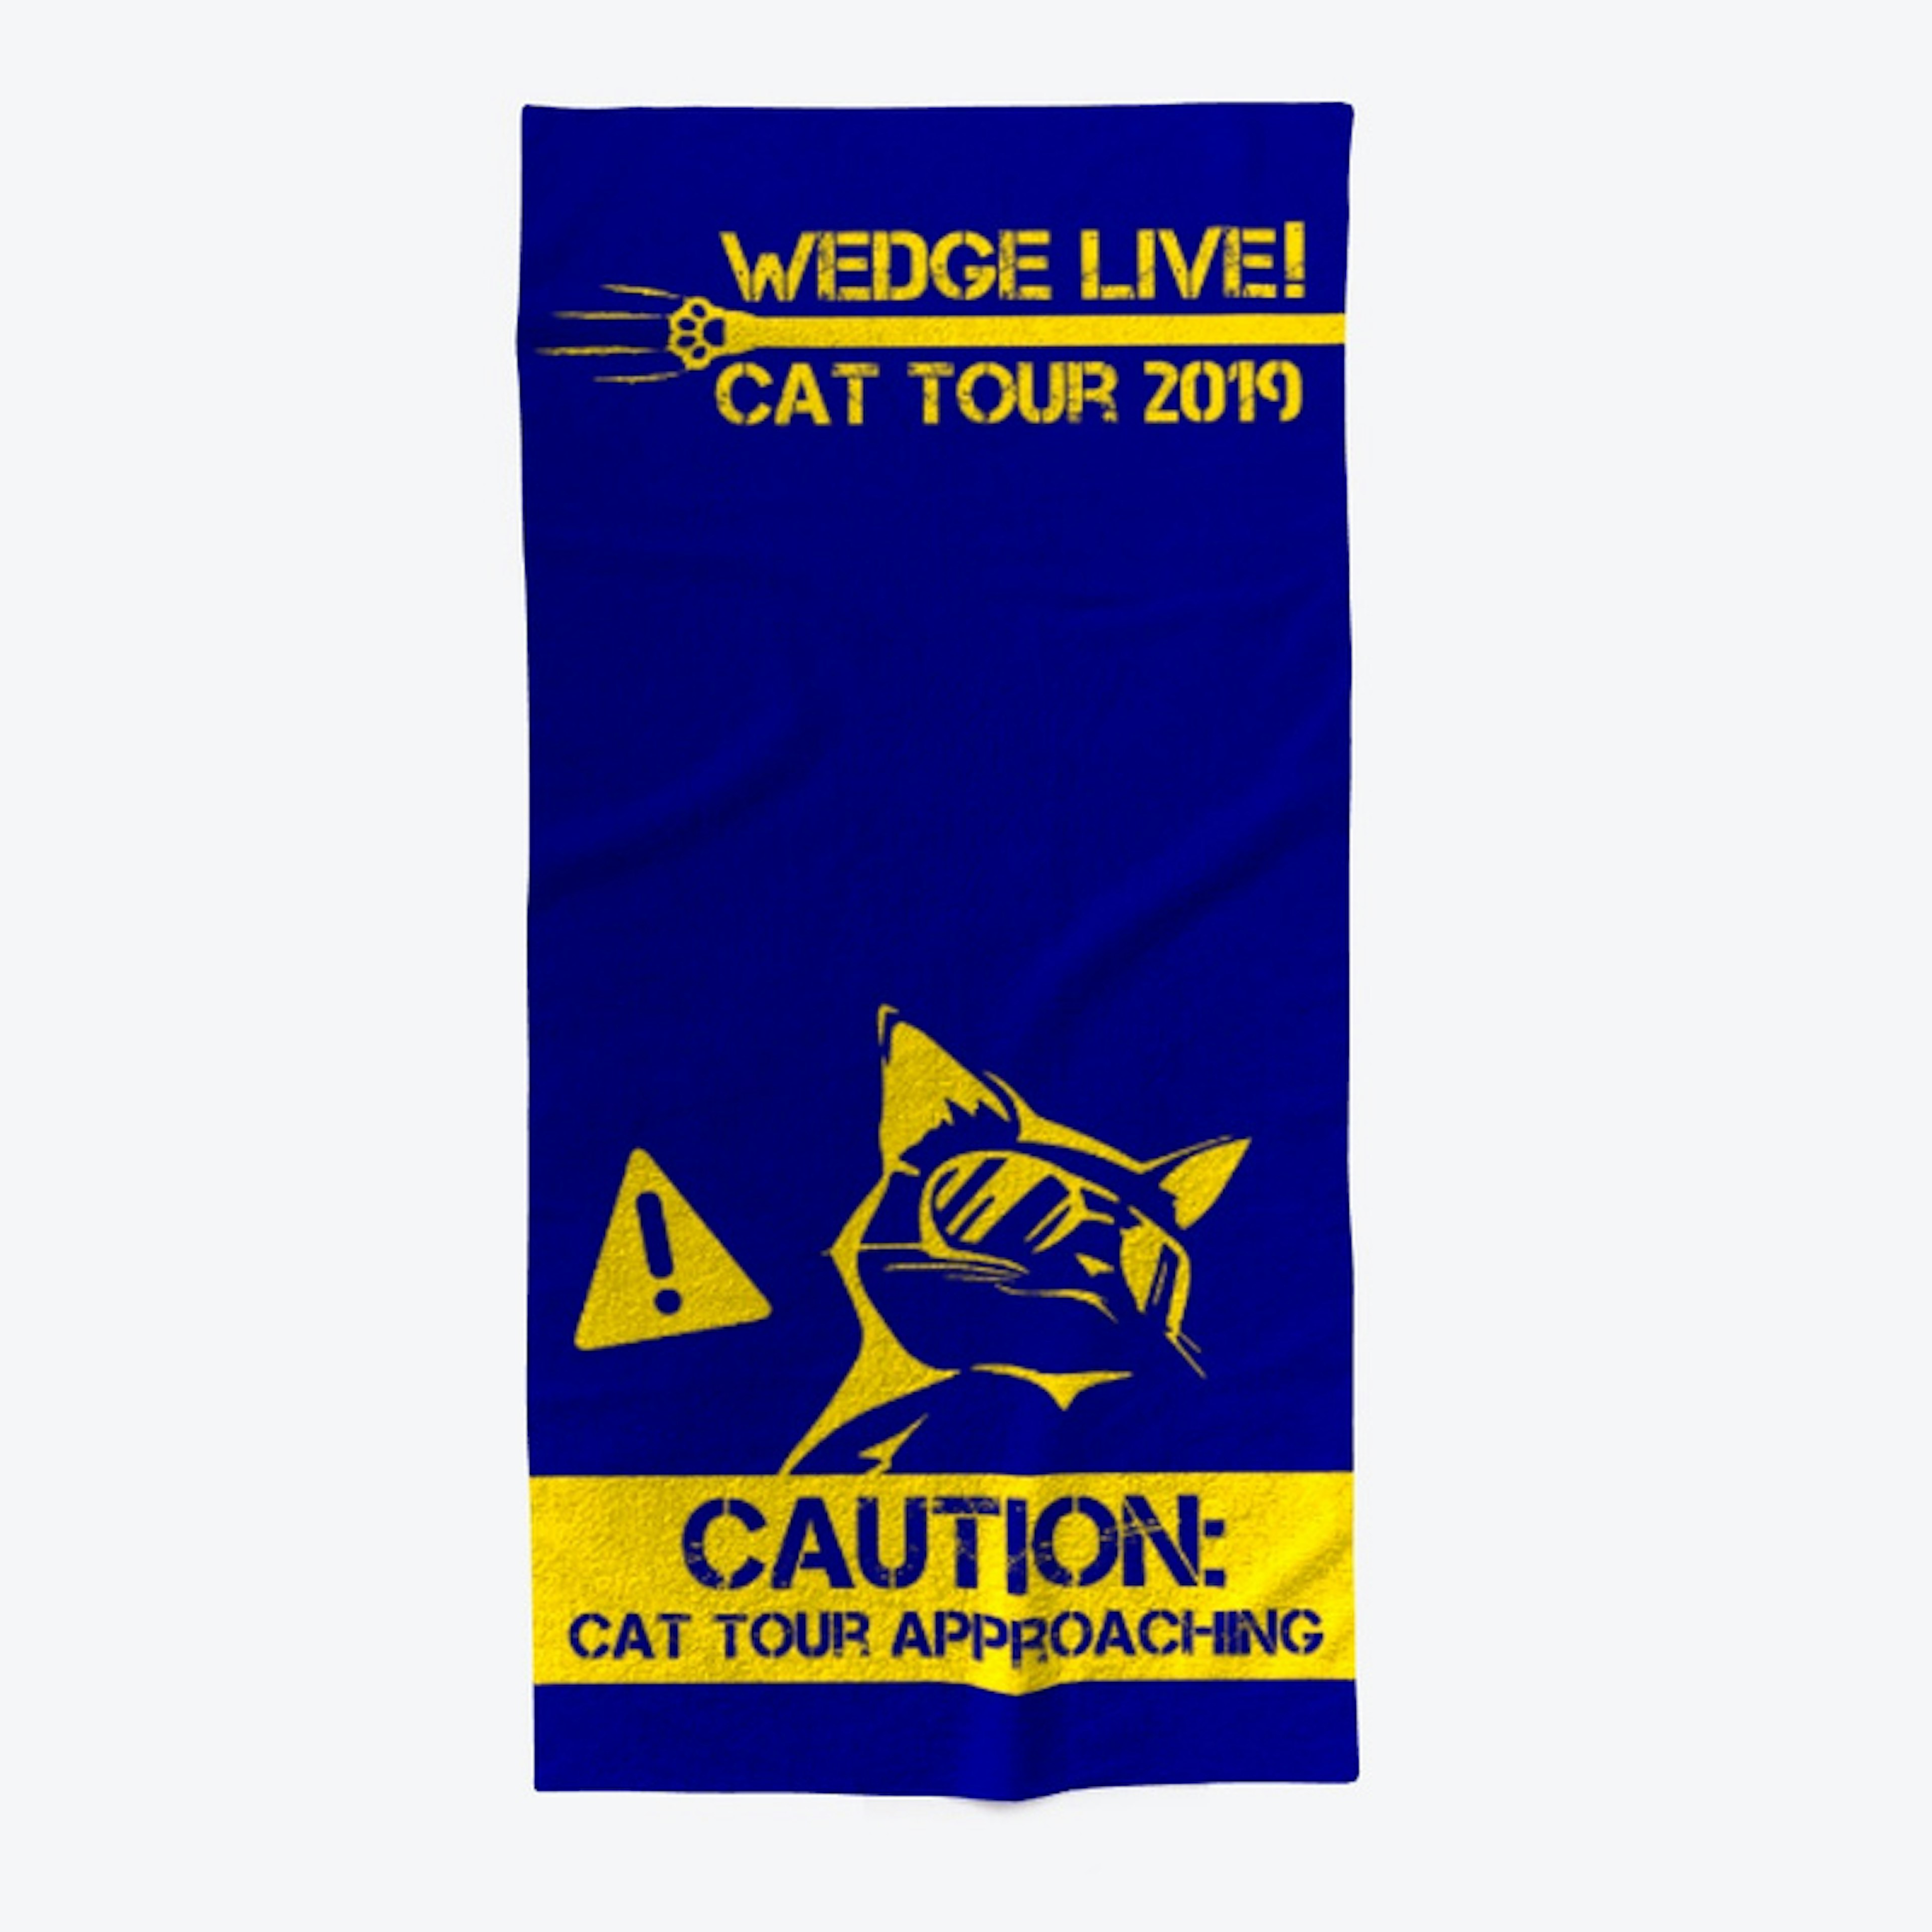 Cat Tour 2019!